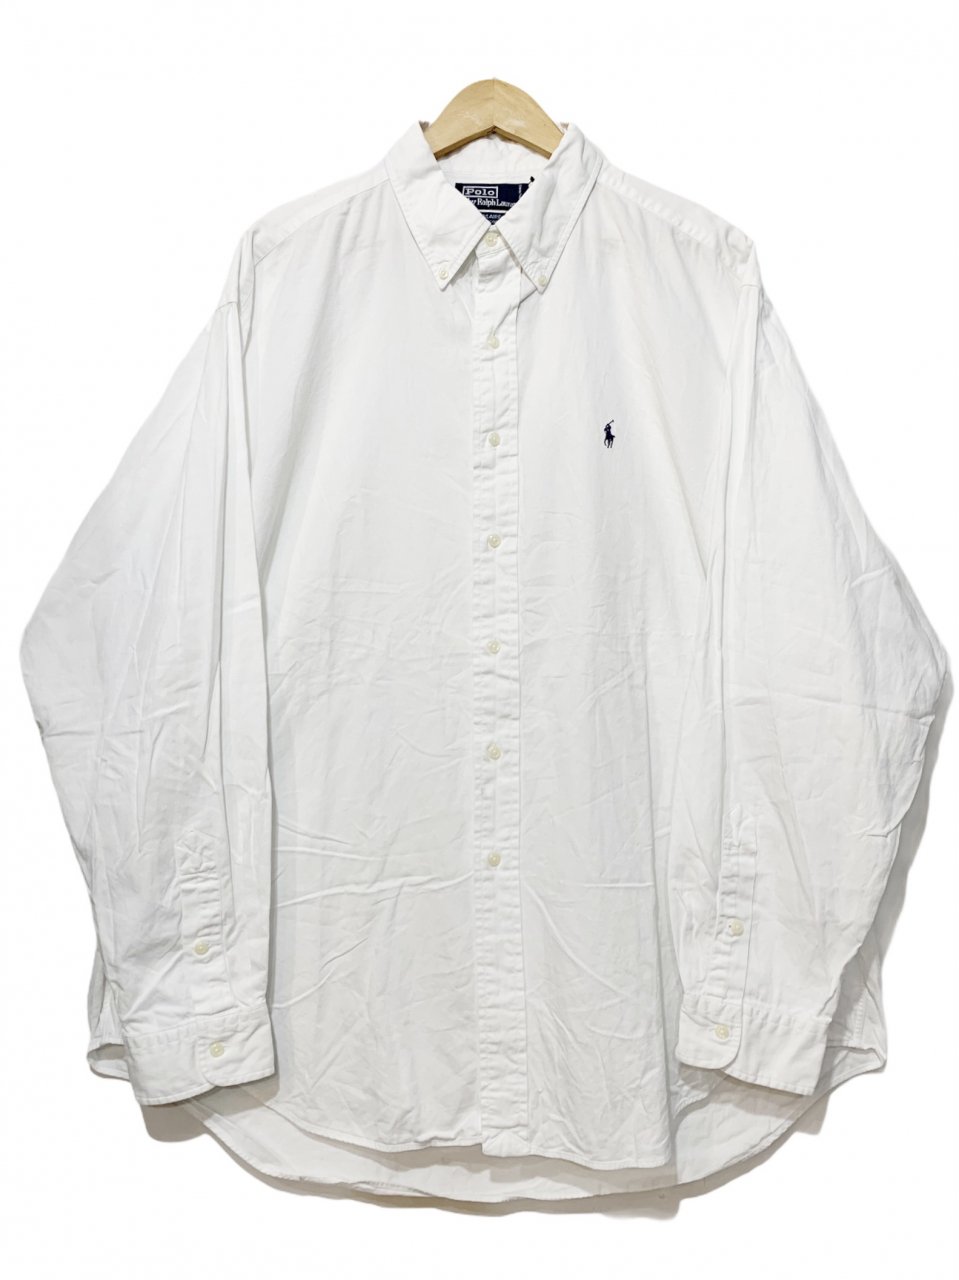 Polo Ralph Lauren "BLAIRE" Cotton BD L/S Shirt 白 XL ポロラルフローレン 長袖 シャツ